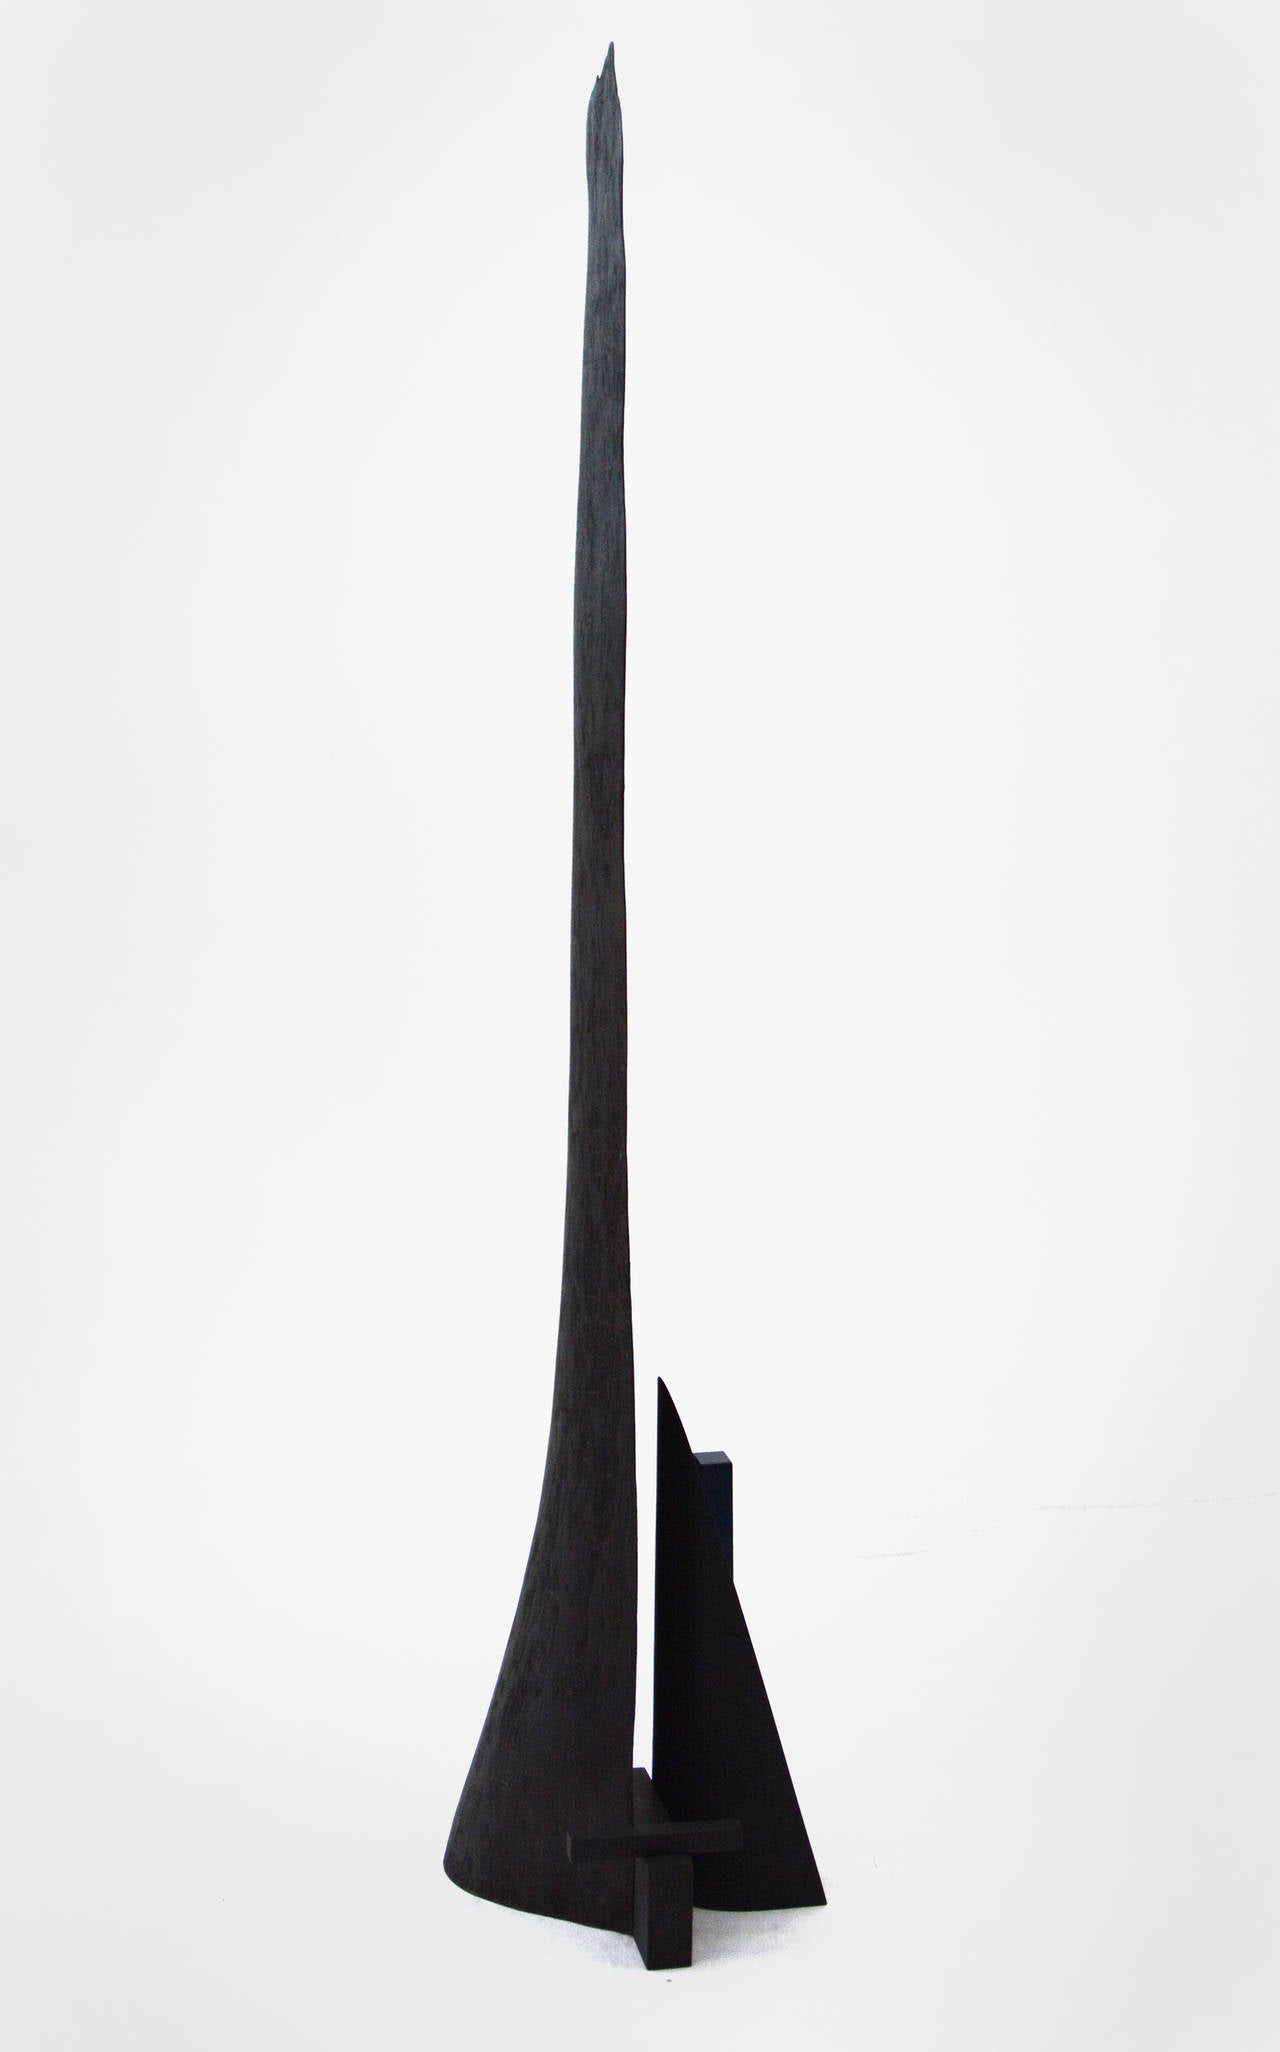 Refuge - tall, dynamic, dark, modern, contemporary, abstract, wooden sculpture - Brown Abstract Sculpture by Edward Falkenberg